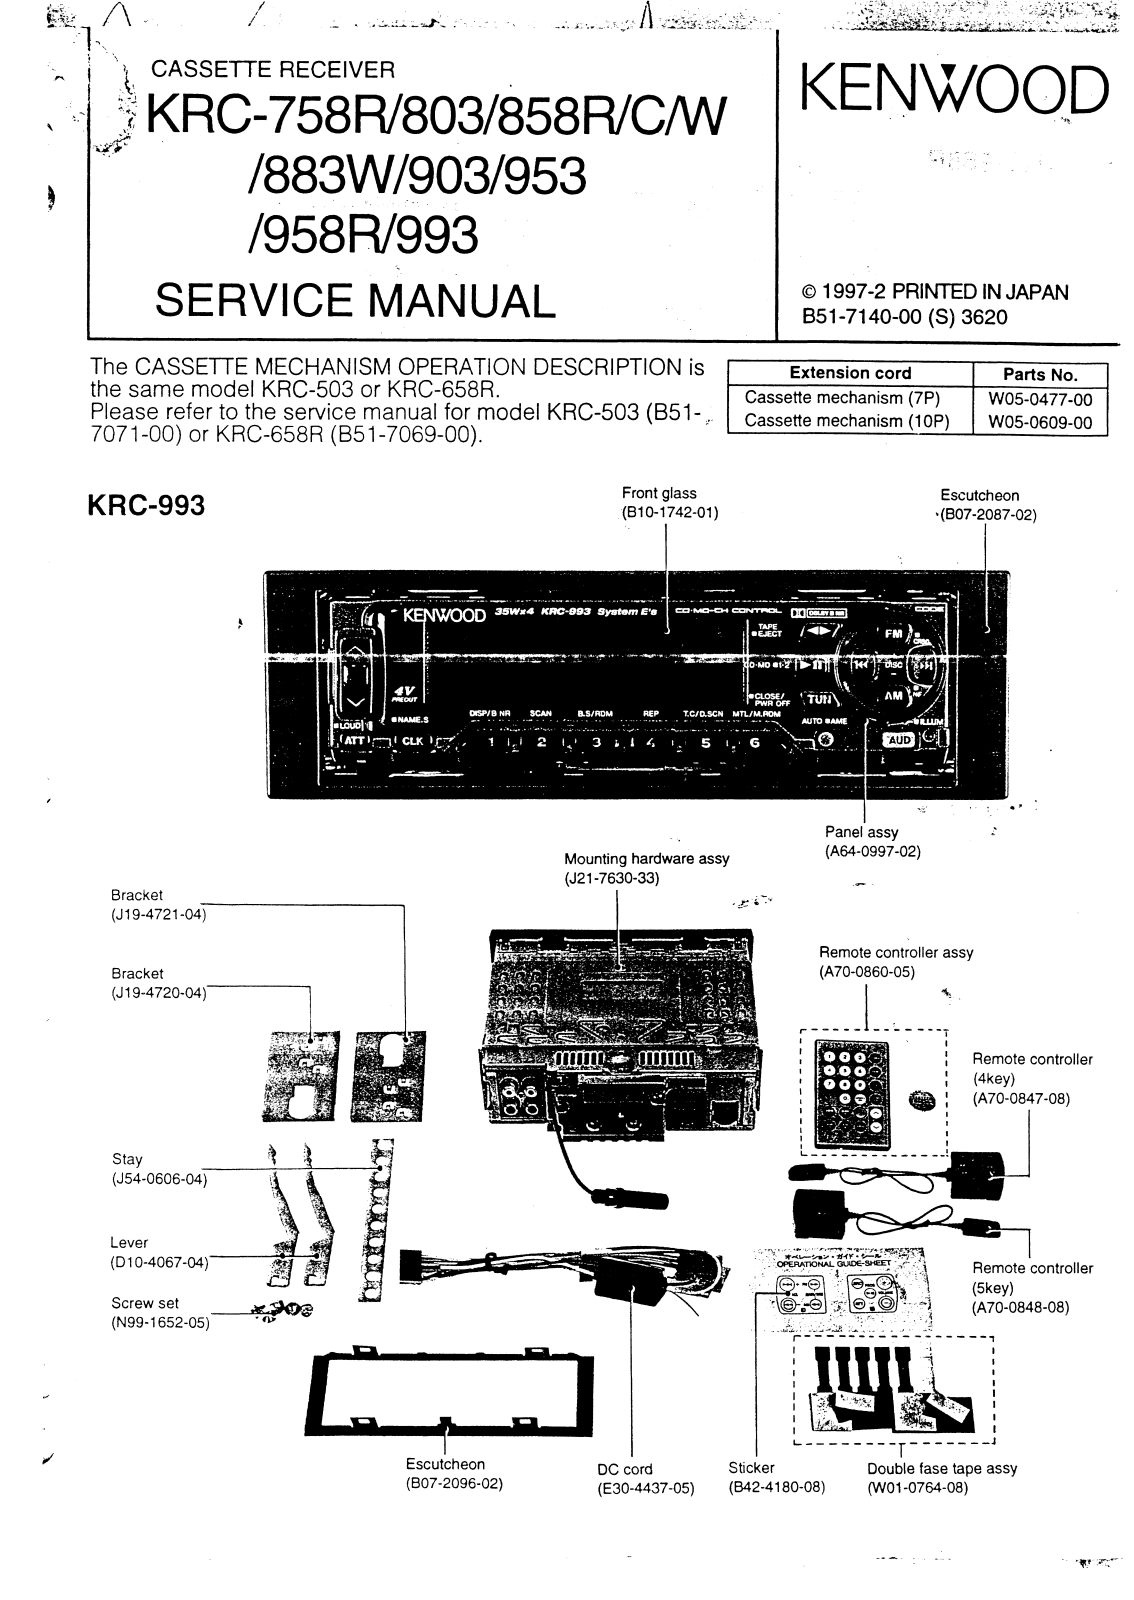 KENWOOD KRC-758, KRC-803, KRC-858, KRC-883, KRC-903 Service Manual